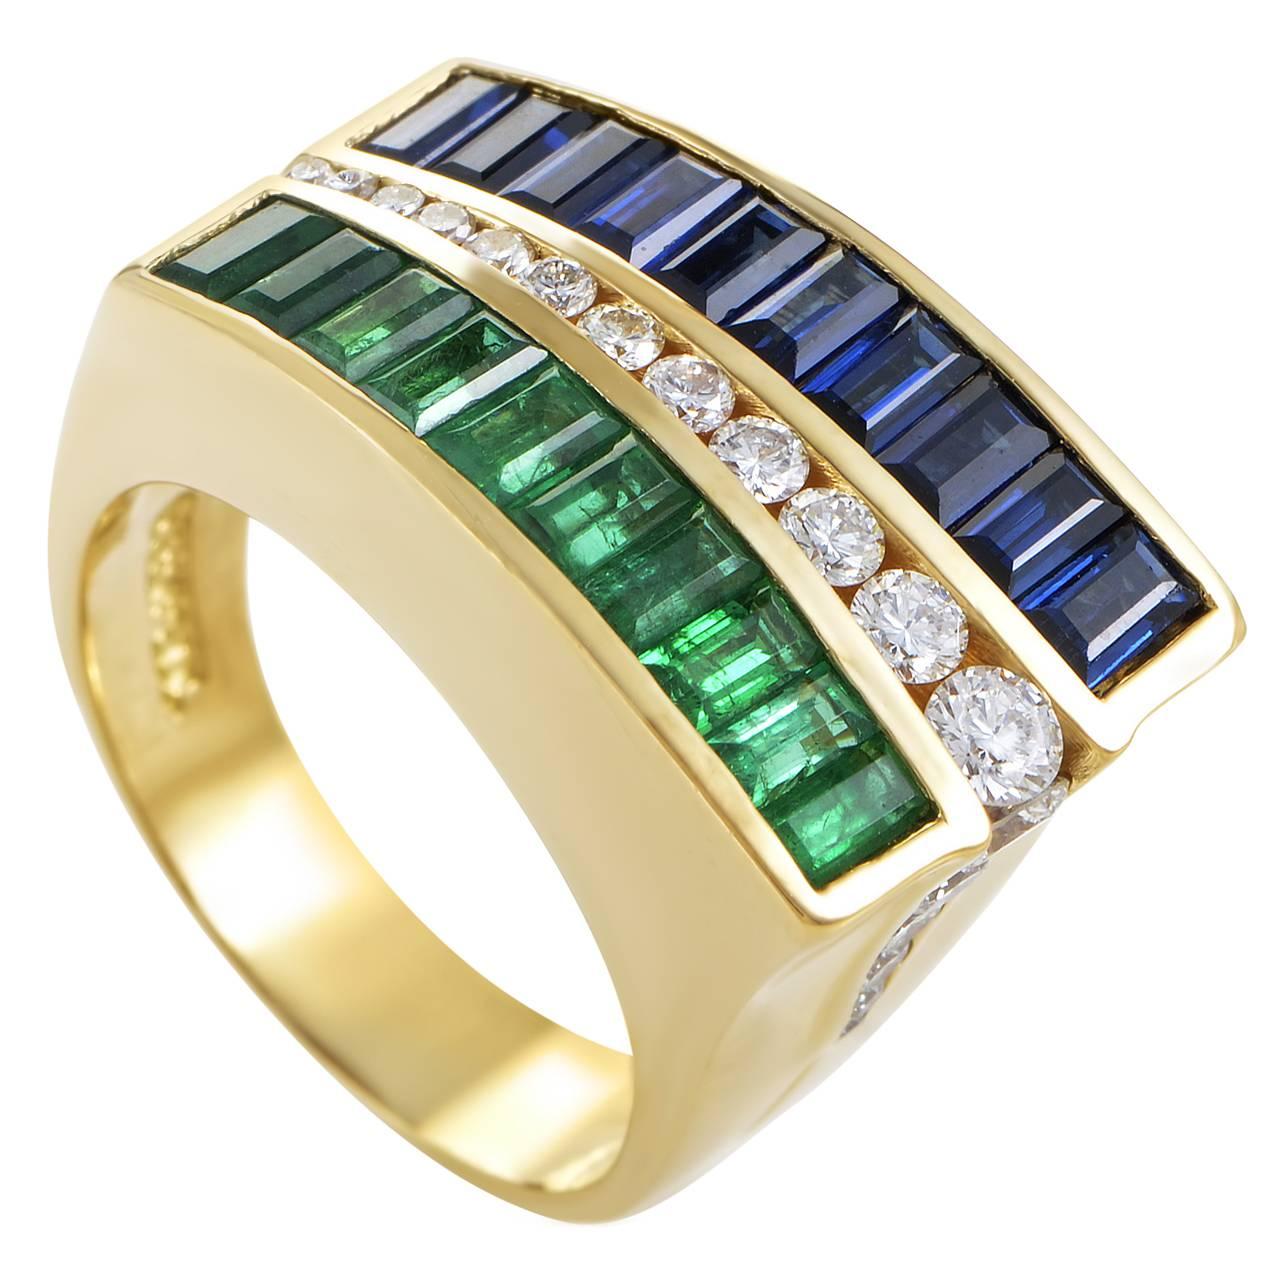 Charles Krypell Precious Gemstone Gold Ring